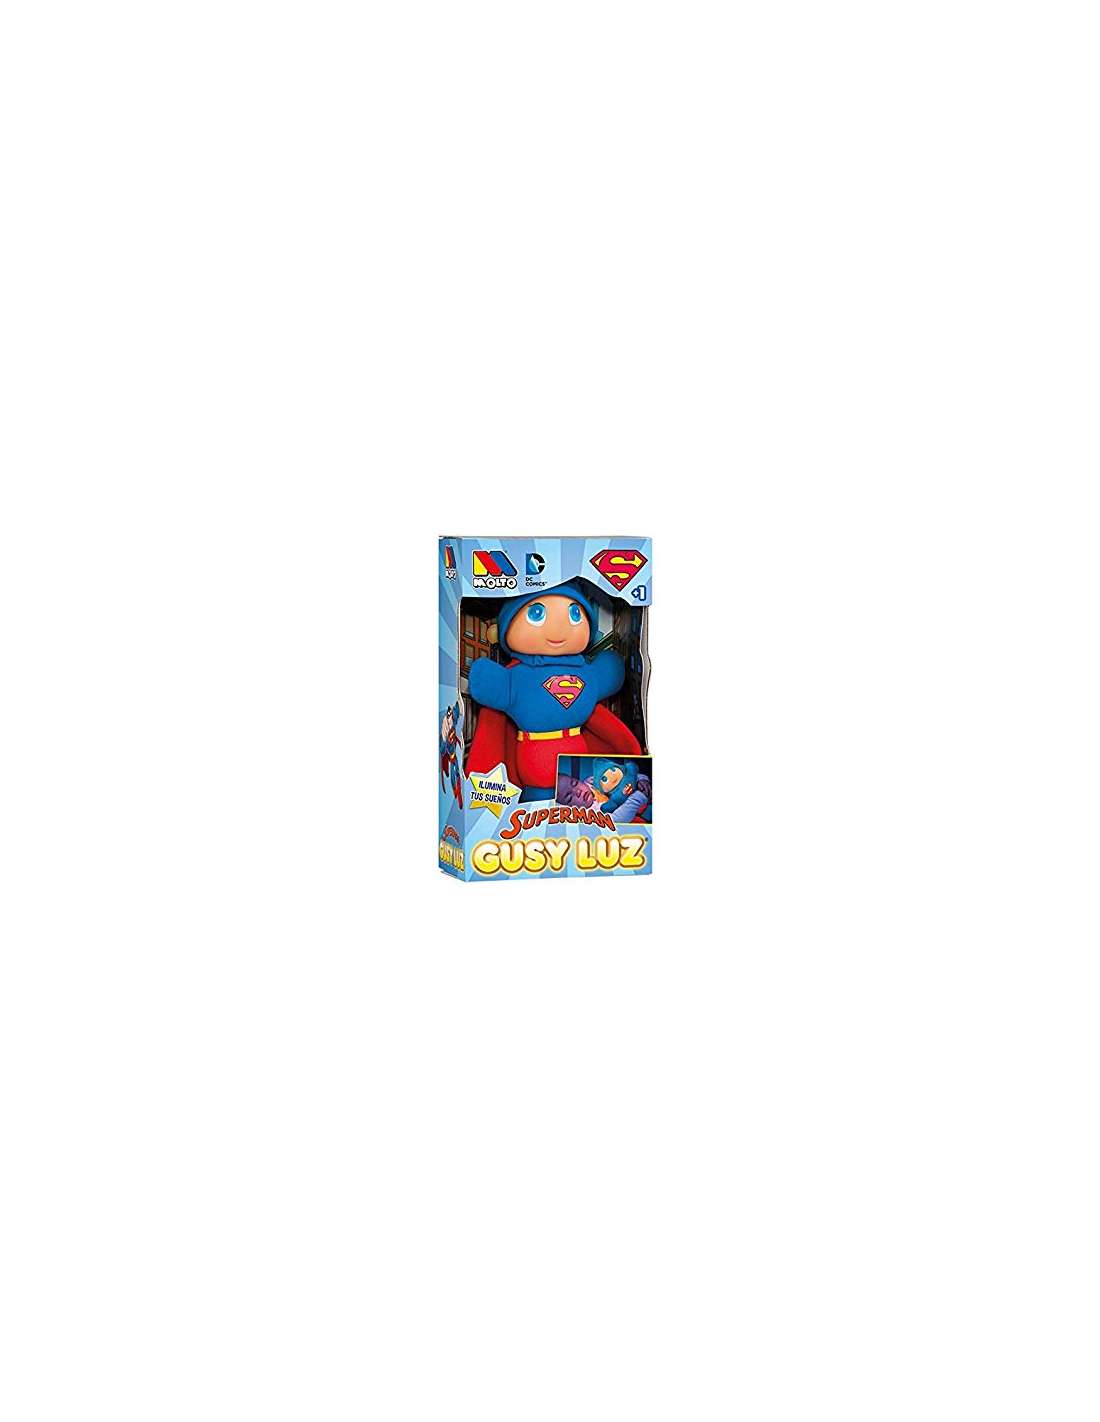 Comprar Molto Gusy Luz Superman, Juguete Infantil